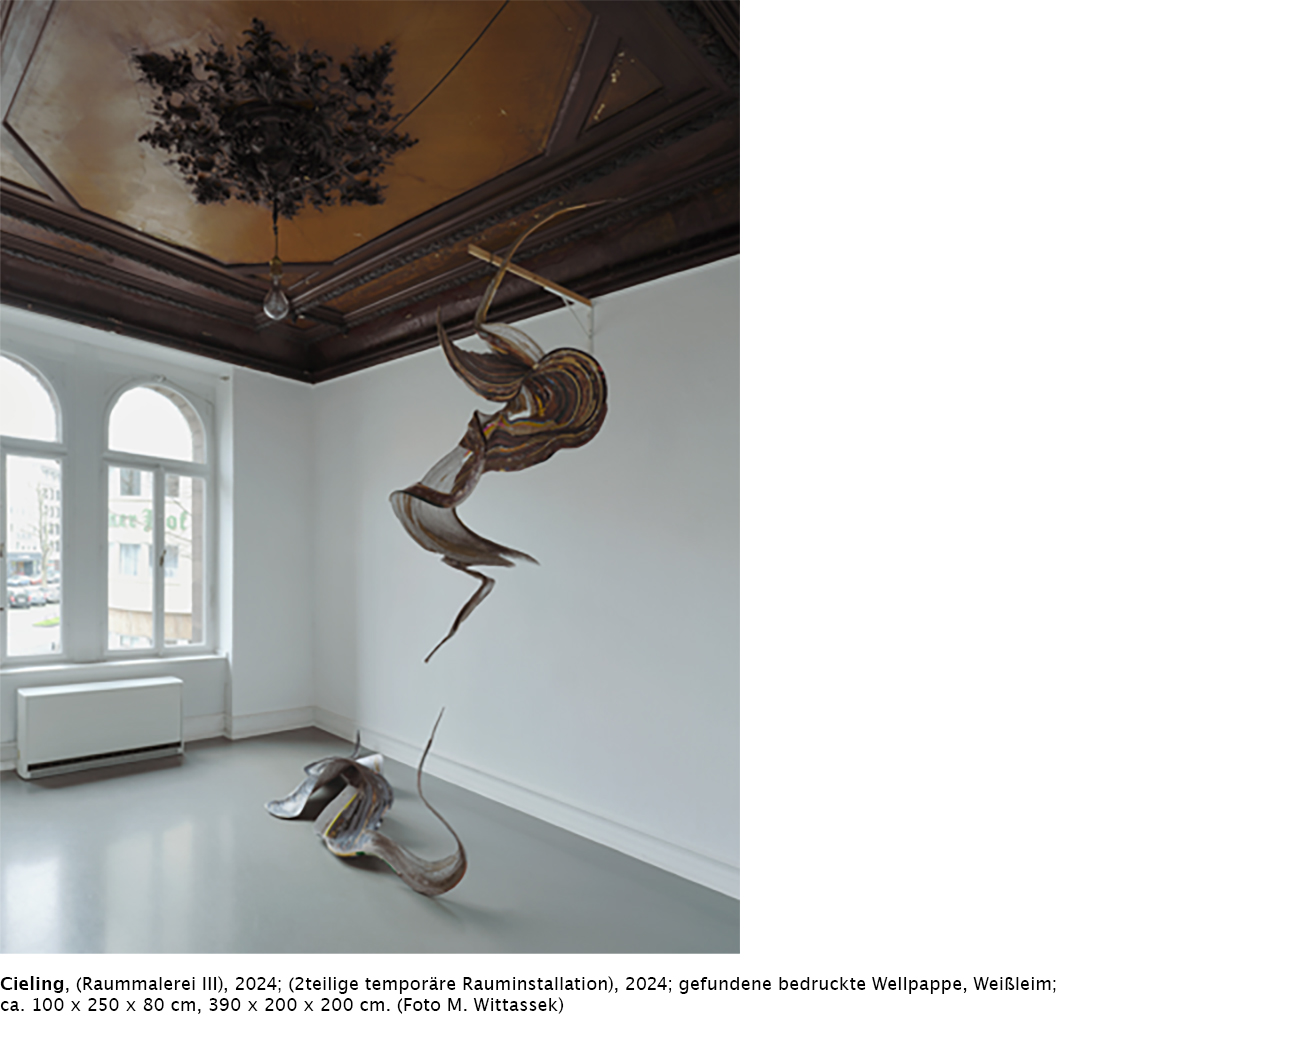 Andreas My, ZartHart-HartZart, mit Hartmut Sy, Galerie am Klostersee, Kloster Lehnin, 2023